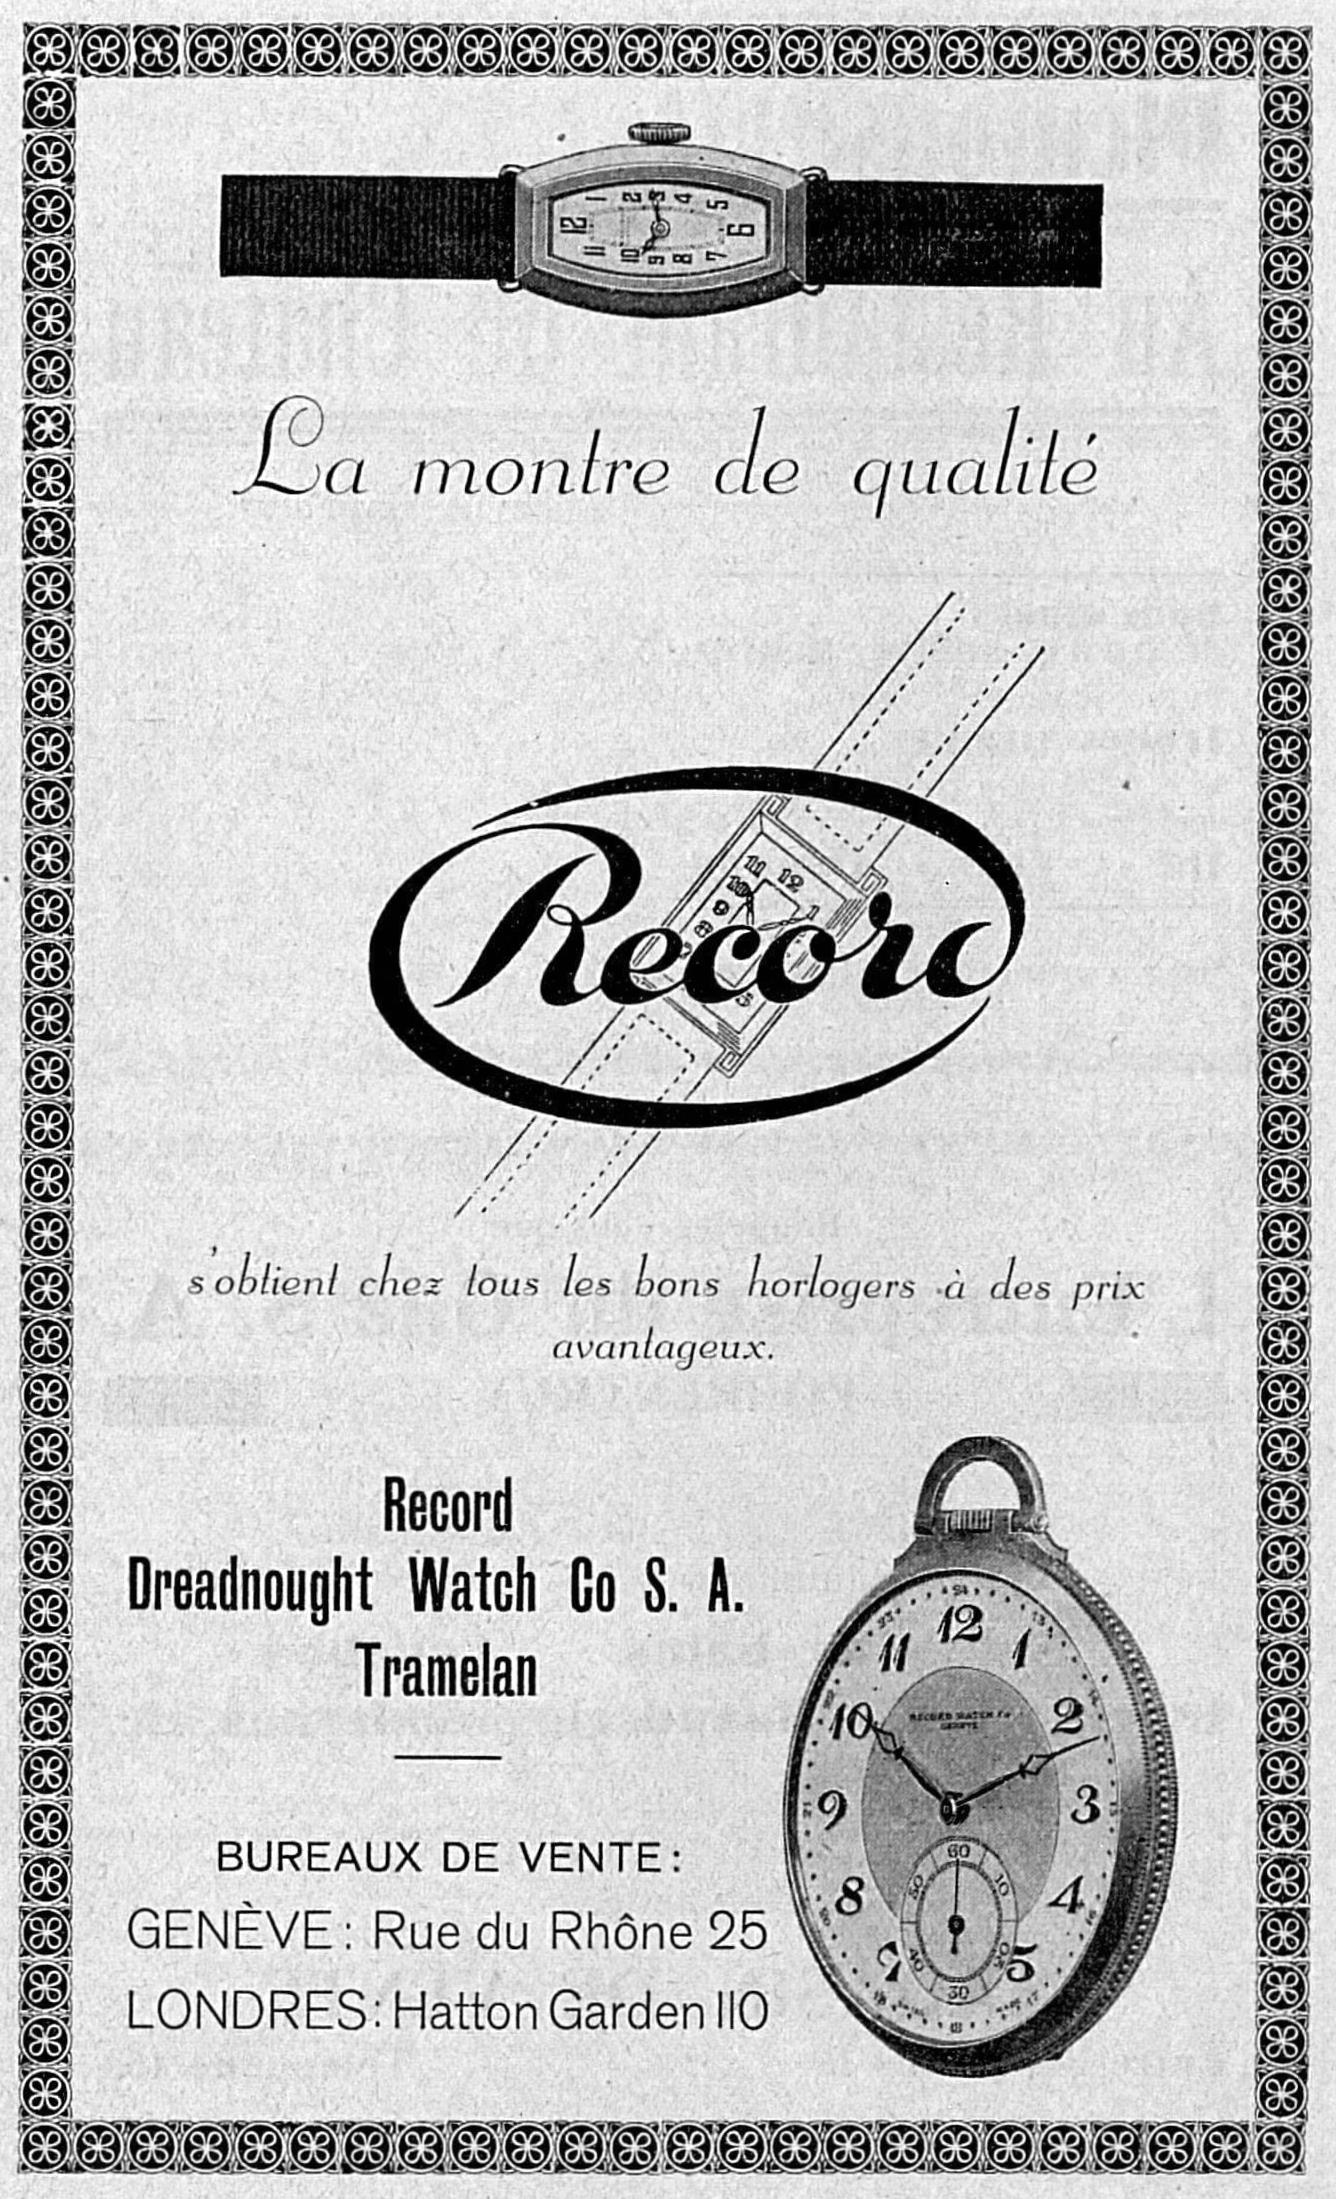 Record 1932 2.jpg